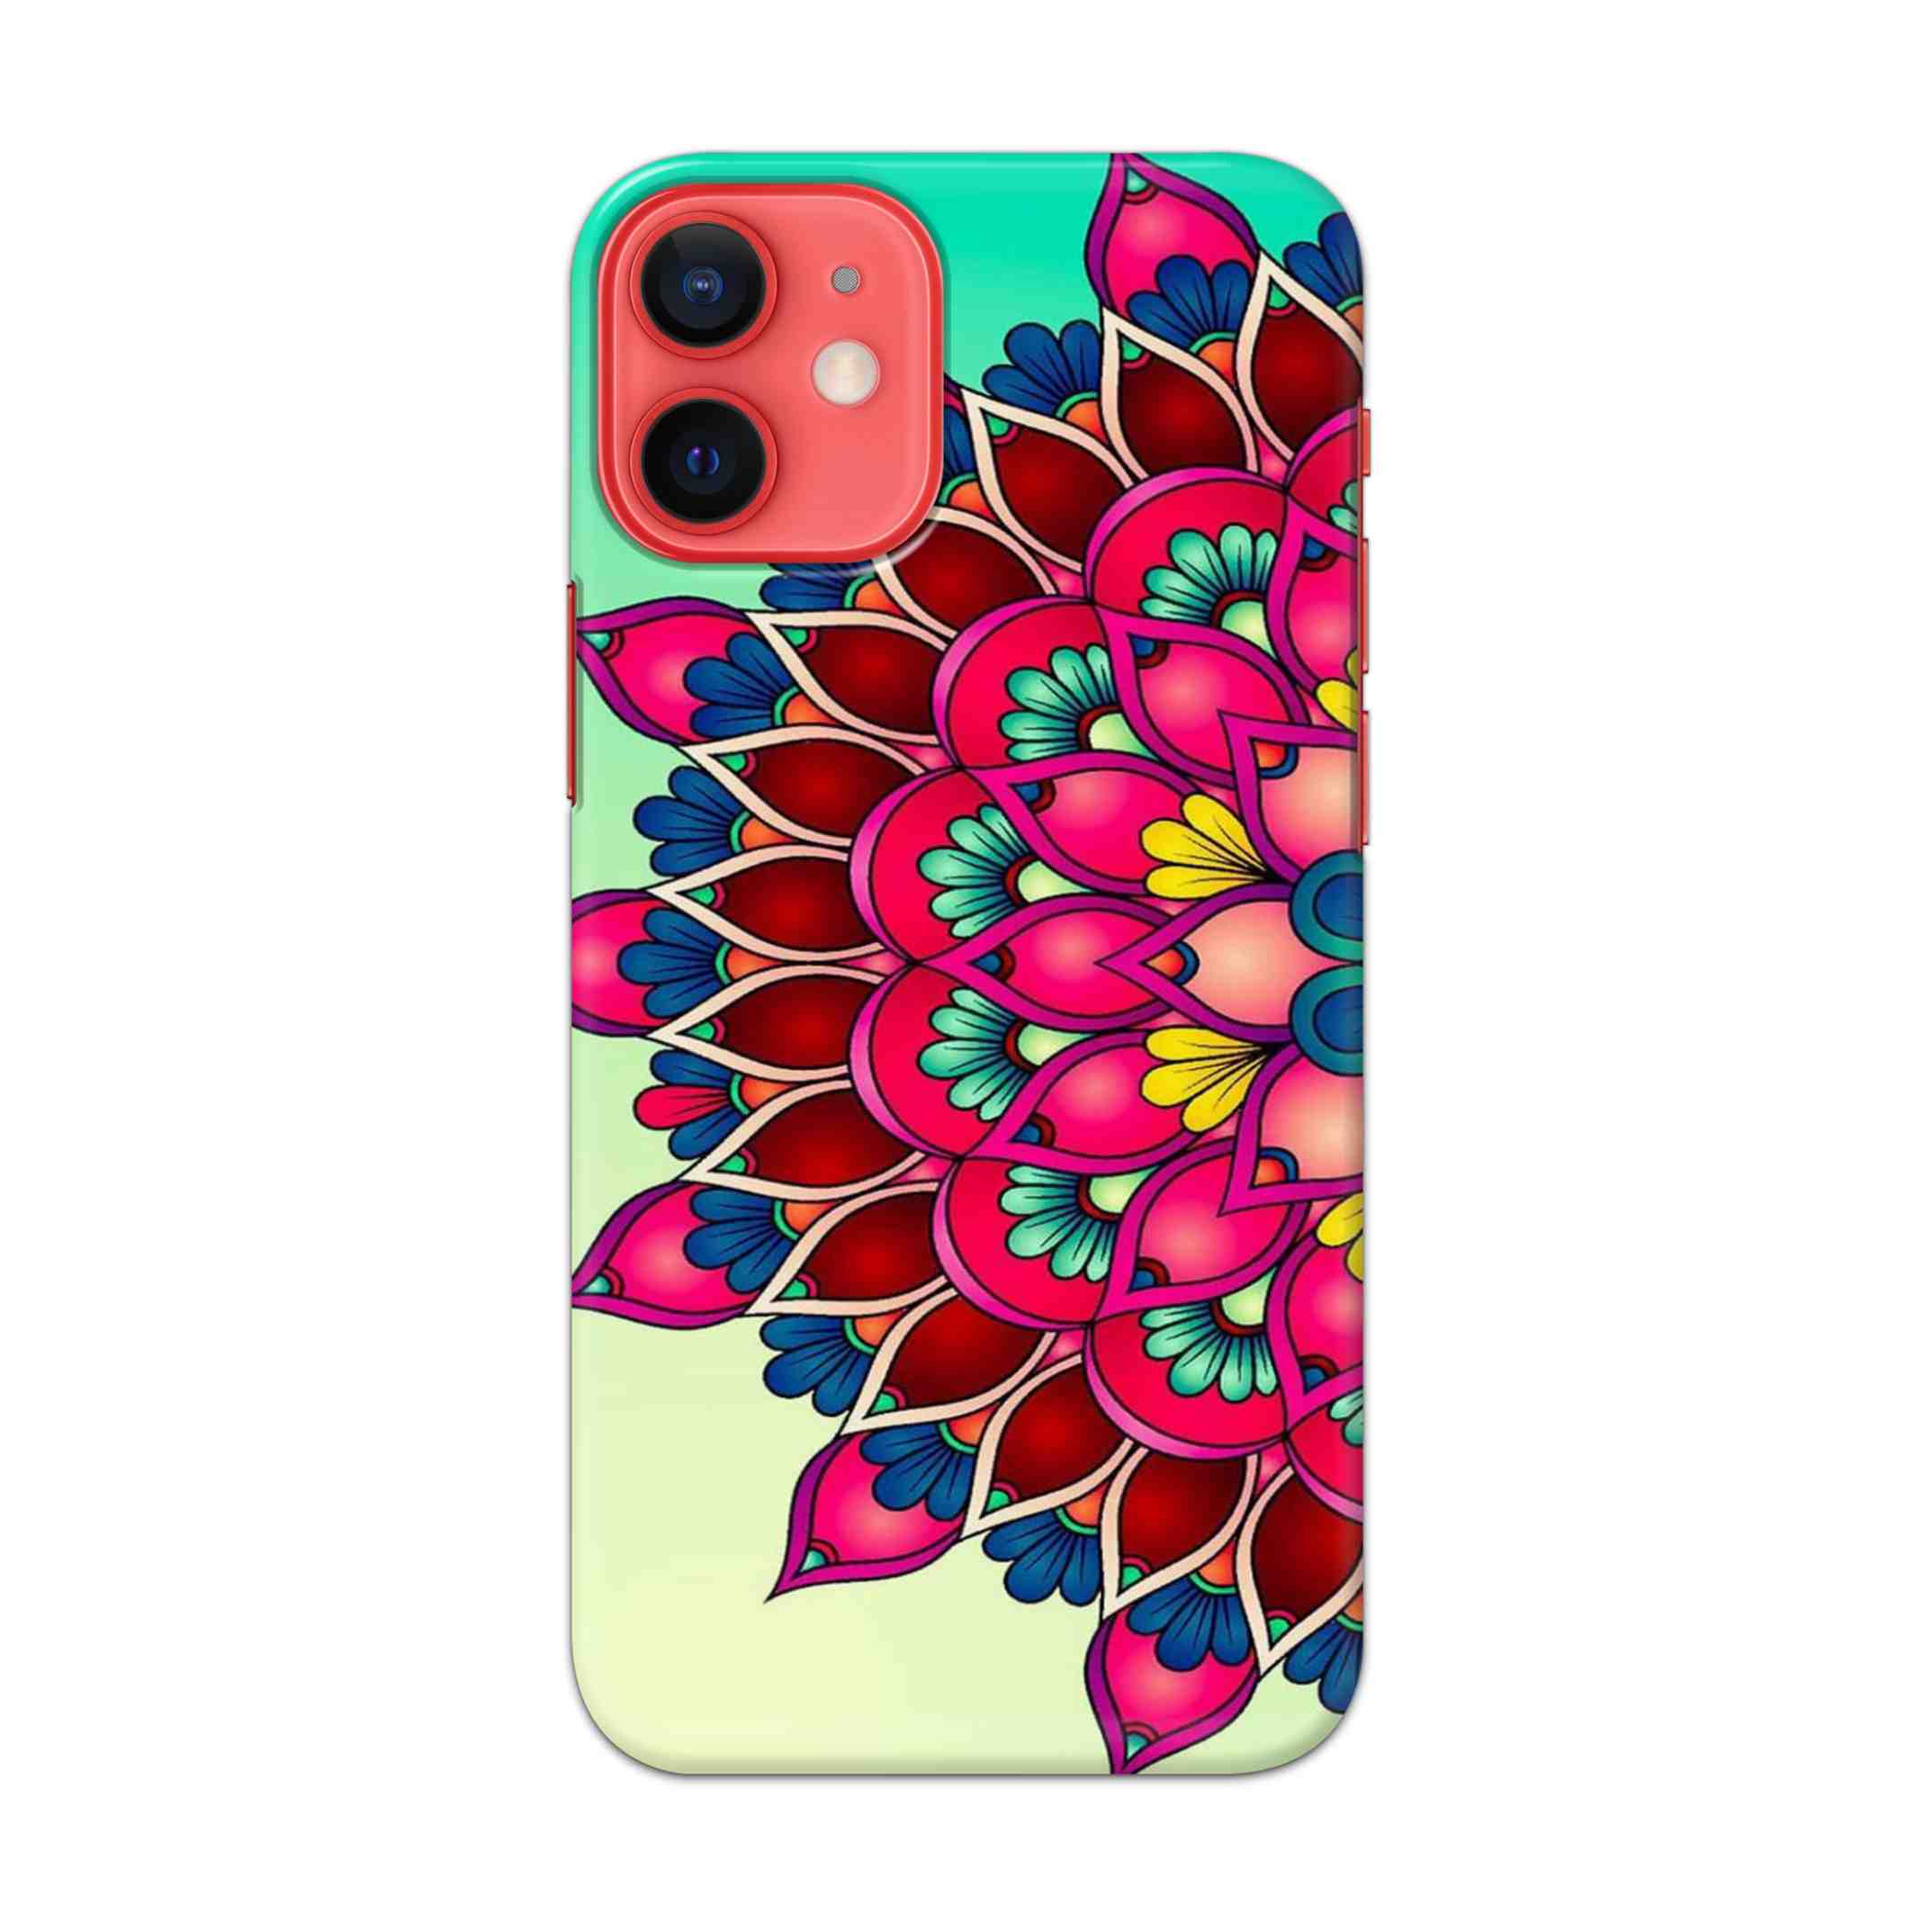 Buy Lotus Mandala Hard Back Mobile Phone Case/Cover For Apple iPhone 12 mini Online